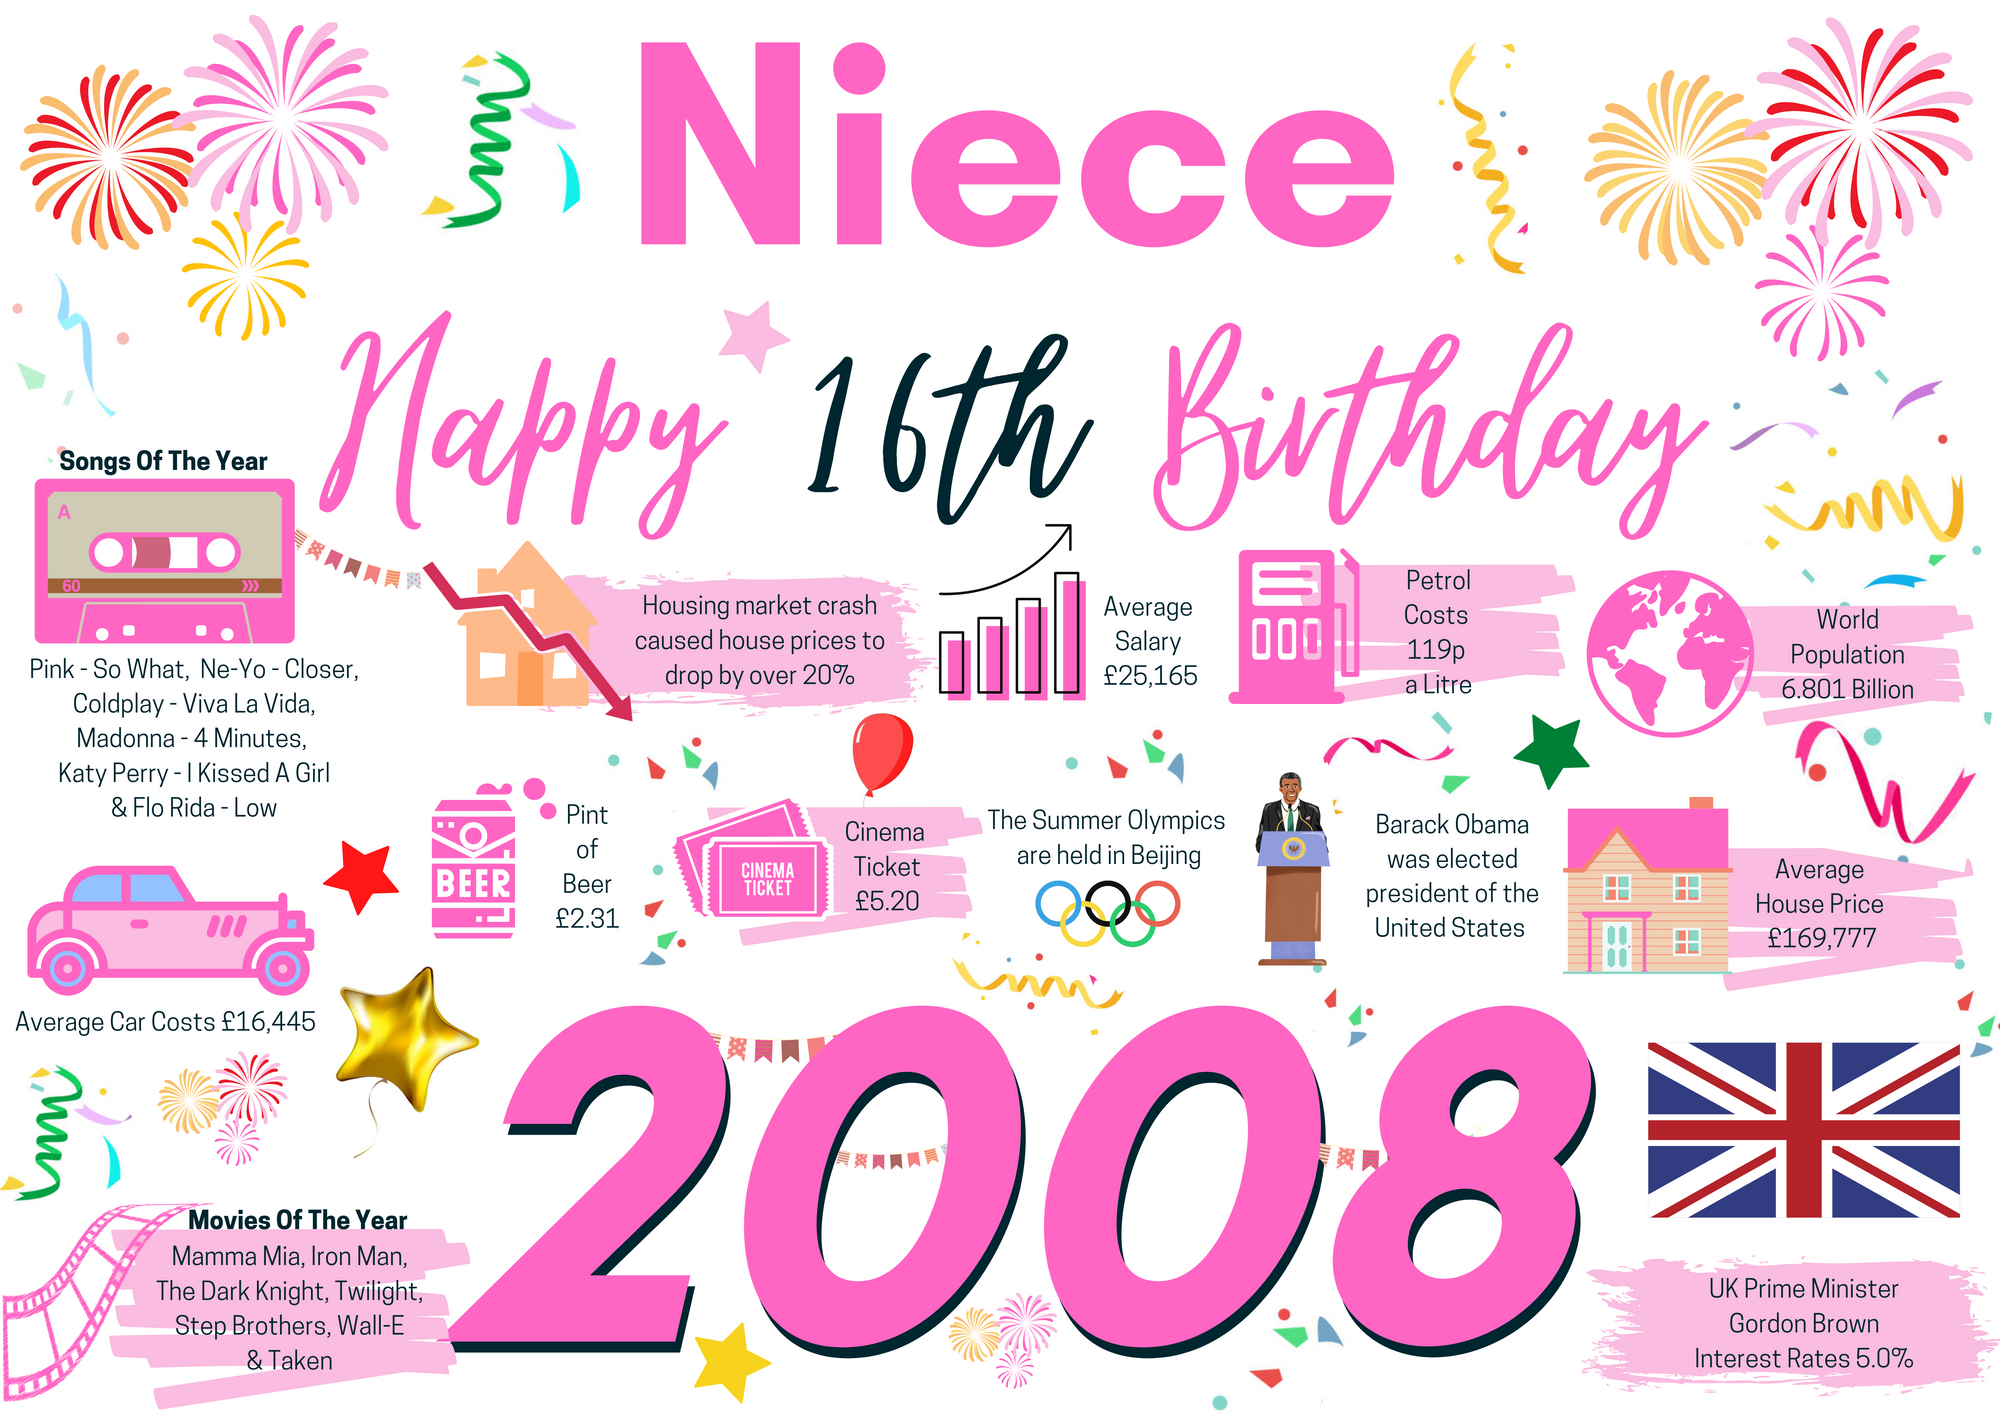 16th Birthday Card For Niece, Born In 2008 Facts Milestone